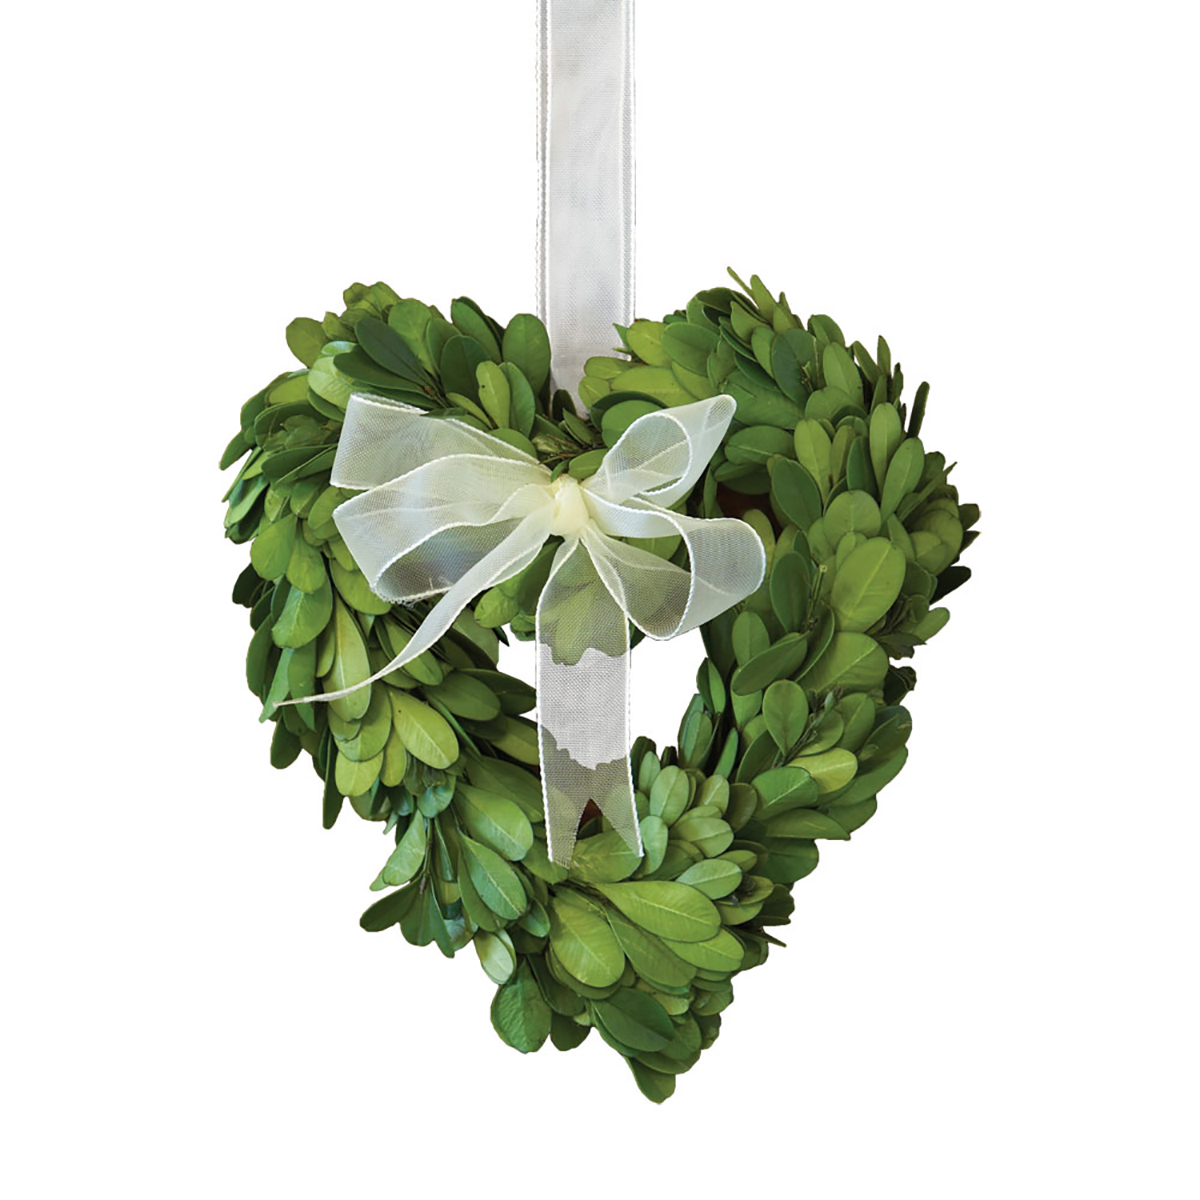 Preserved Boxwood Wreath - Heart 16